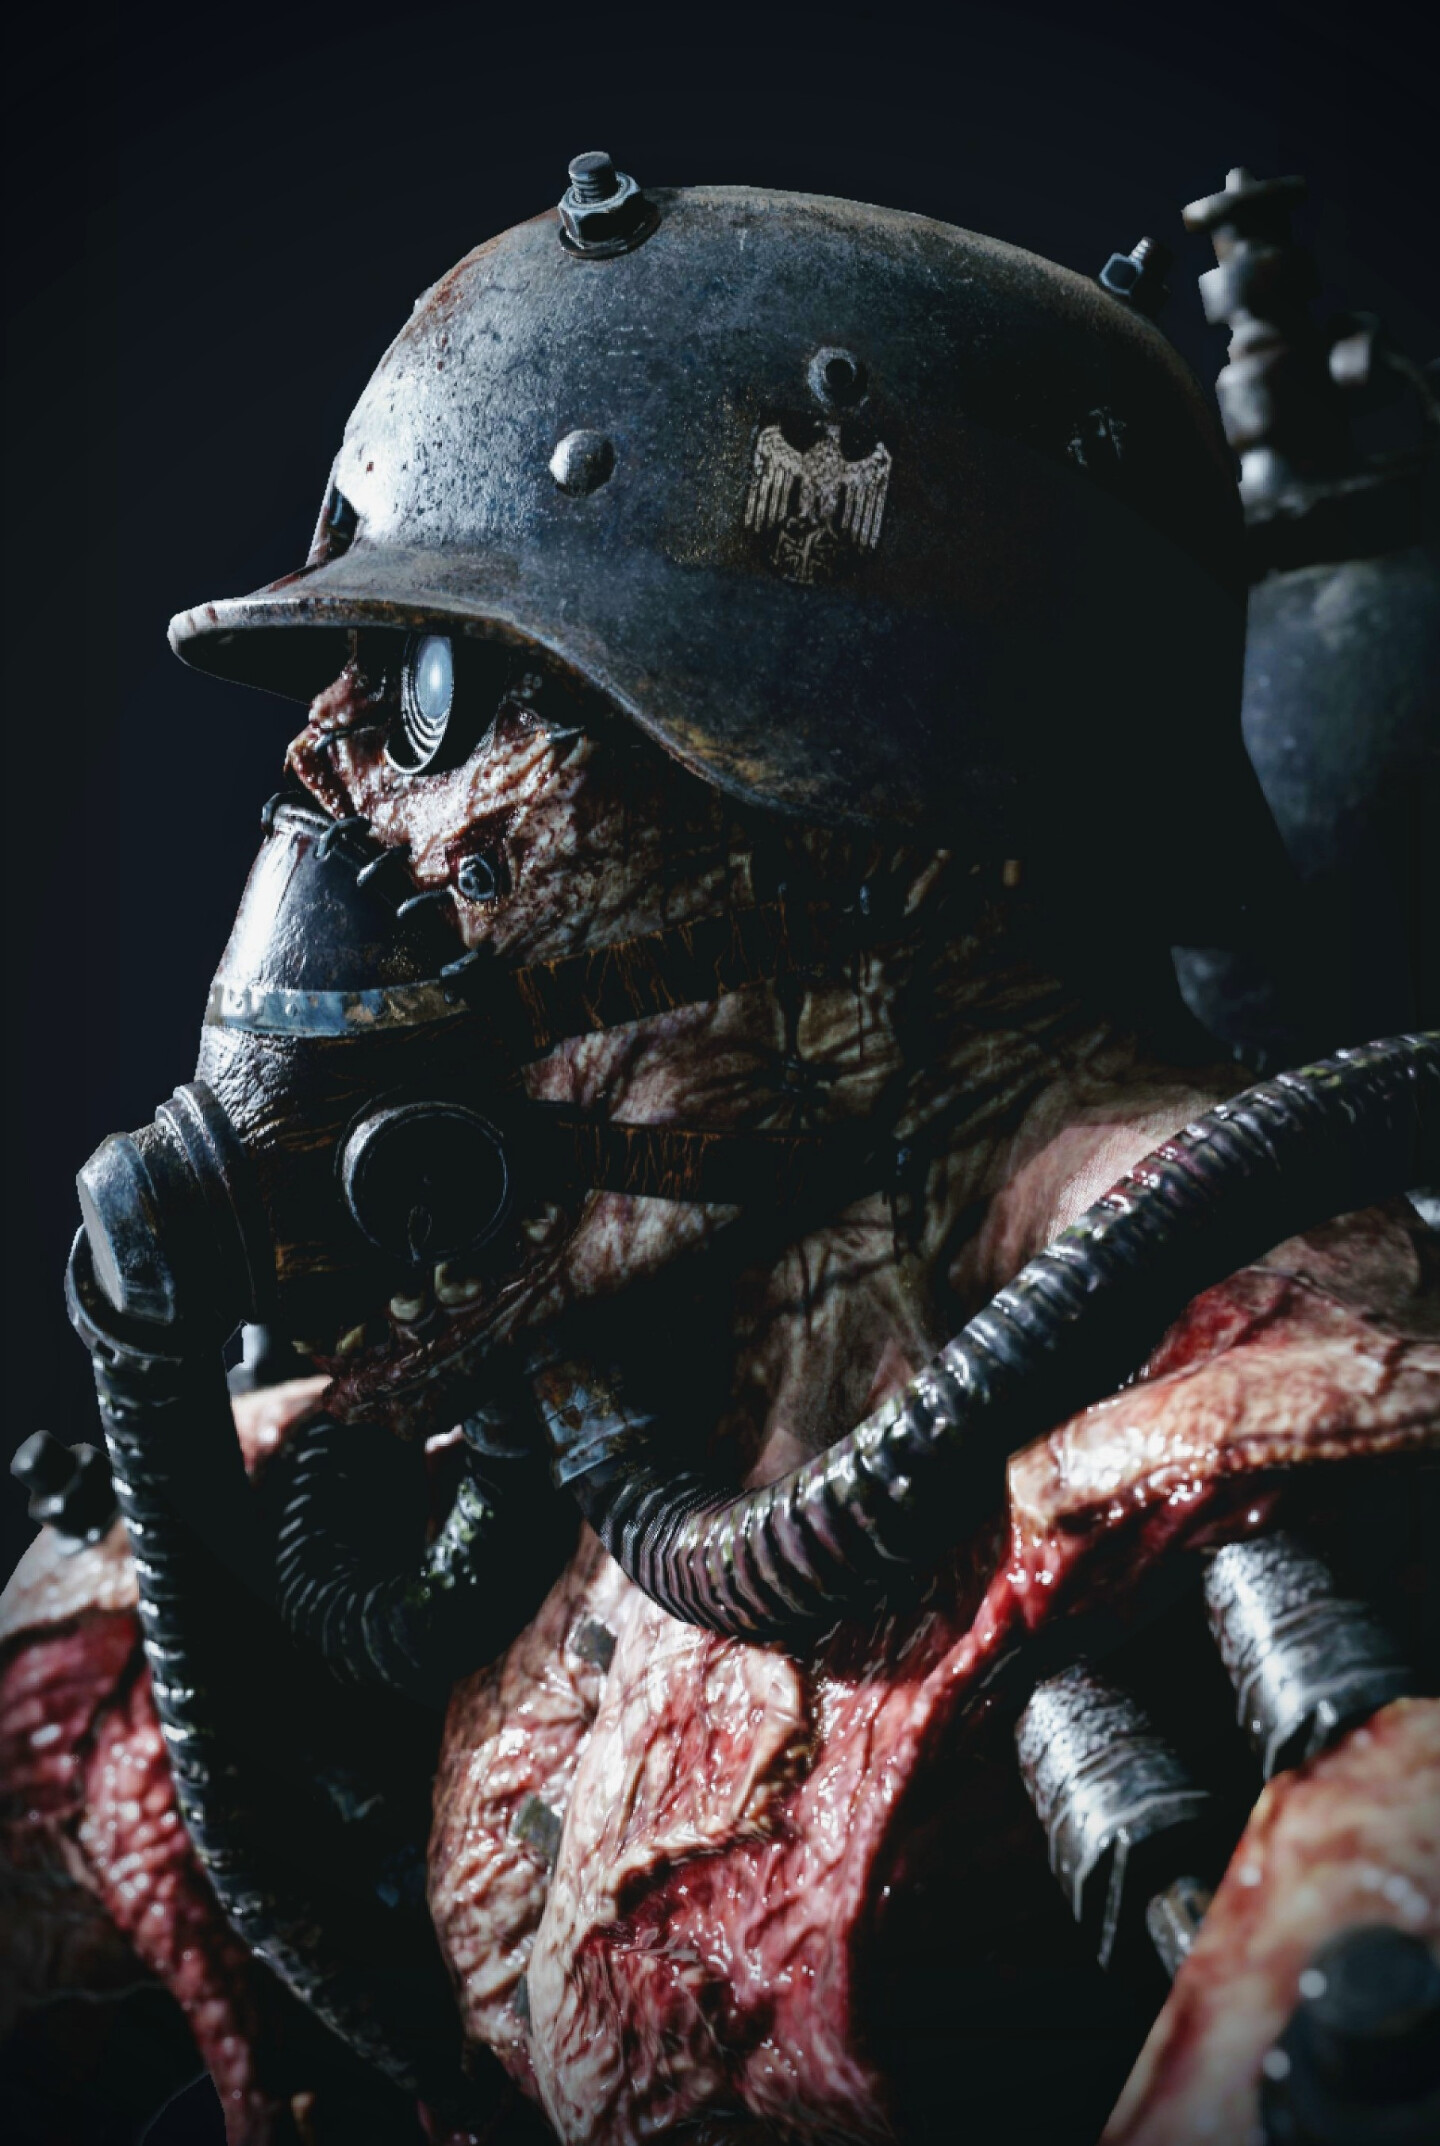 Csaba Molnar - Fodder - Call of Duty WW2 Nazi Zombies